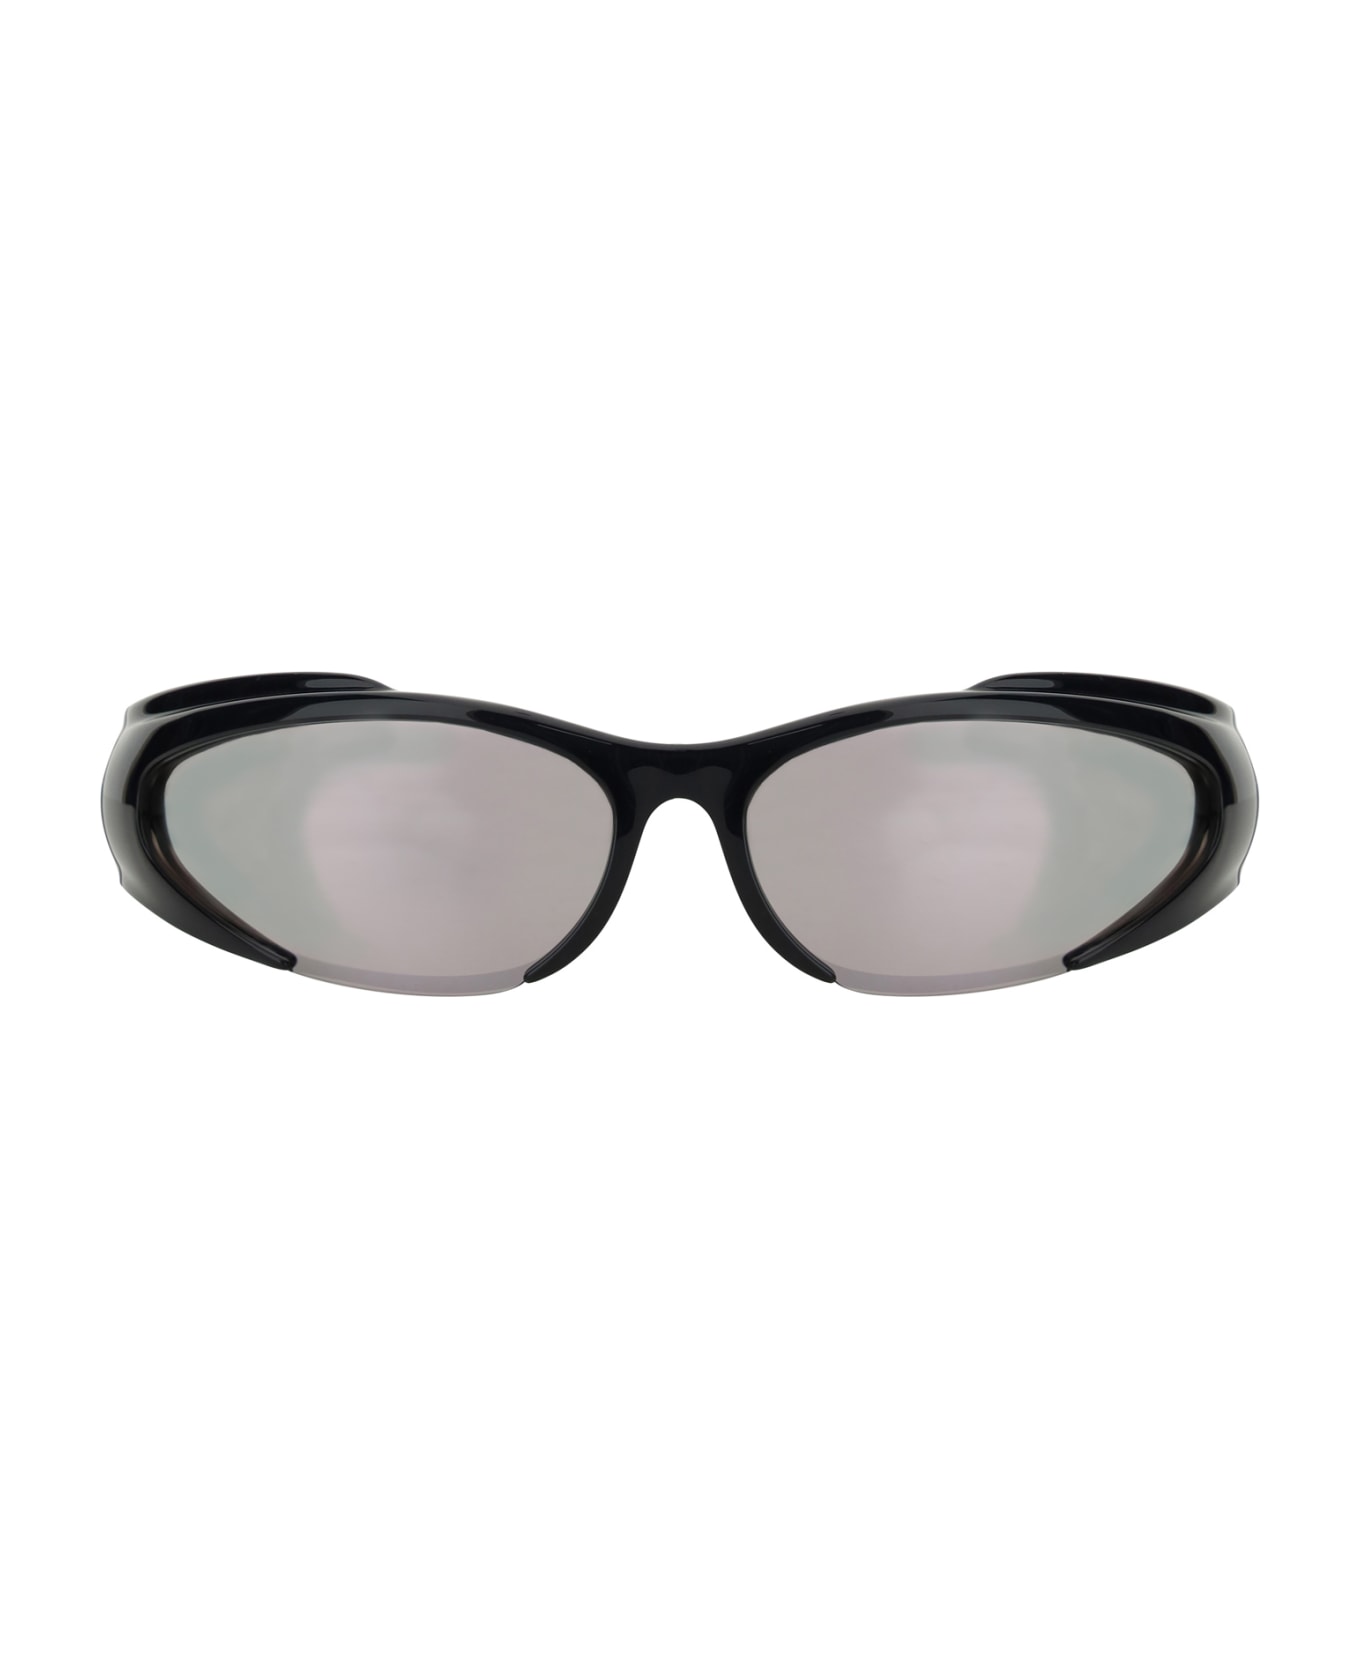 Balenciaga Eyewear Rex Xpand Sunglasses - Black/mirror Silver